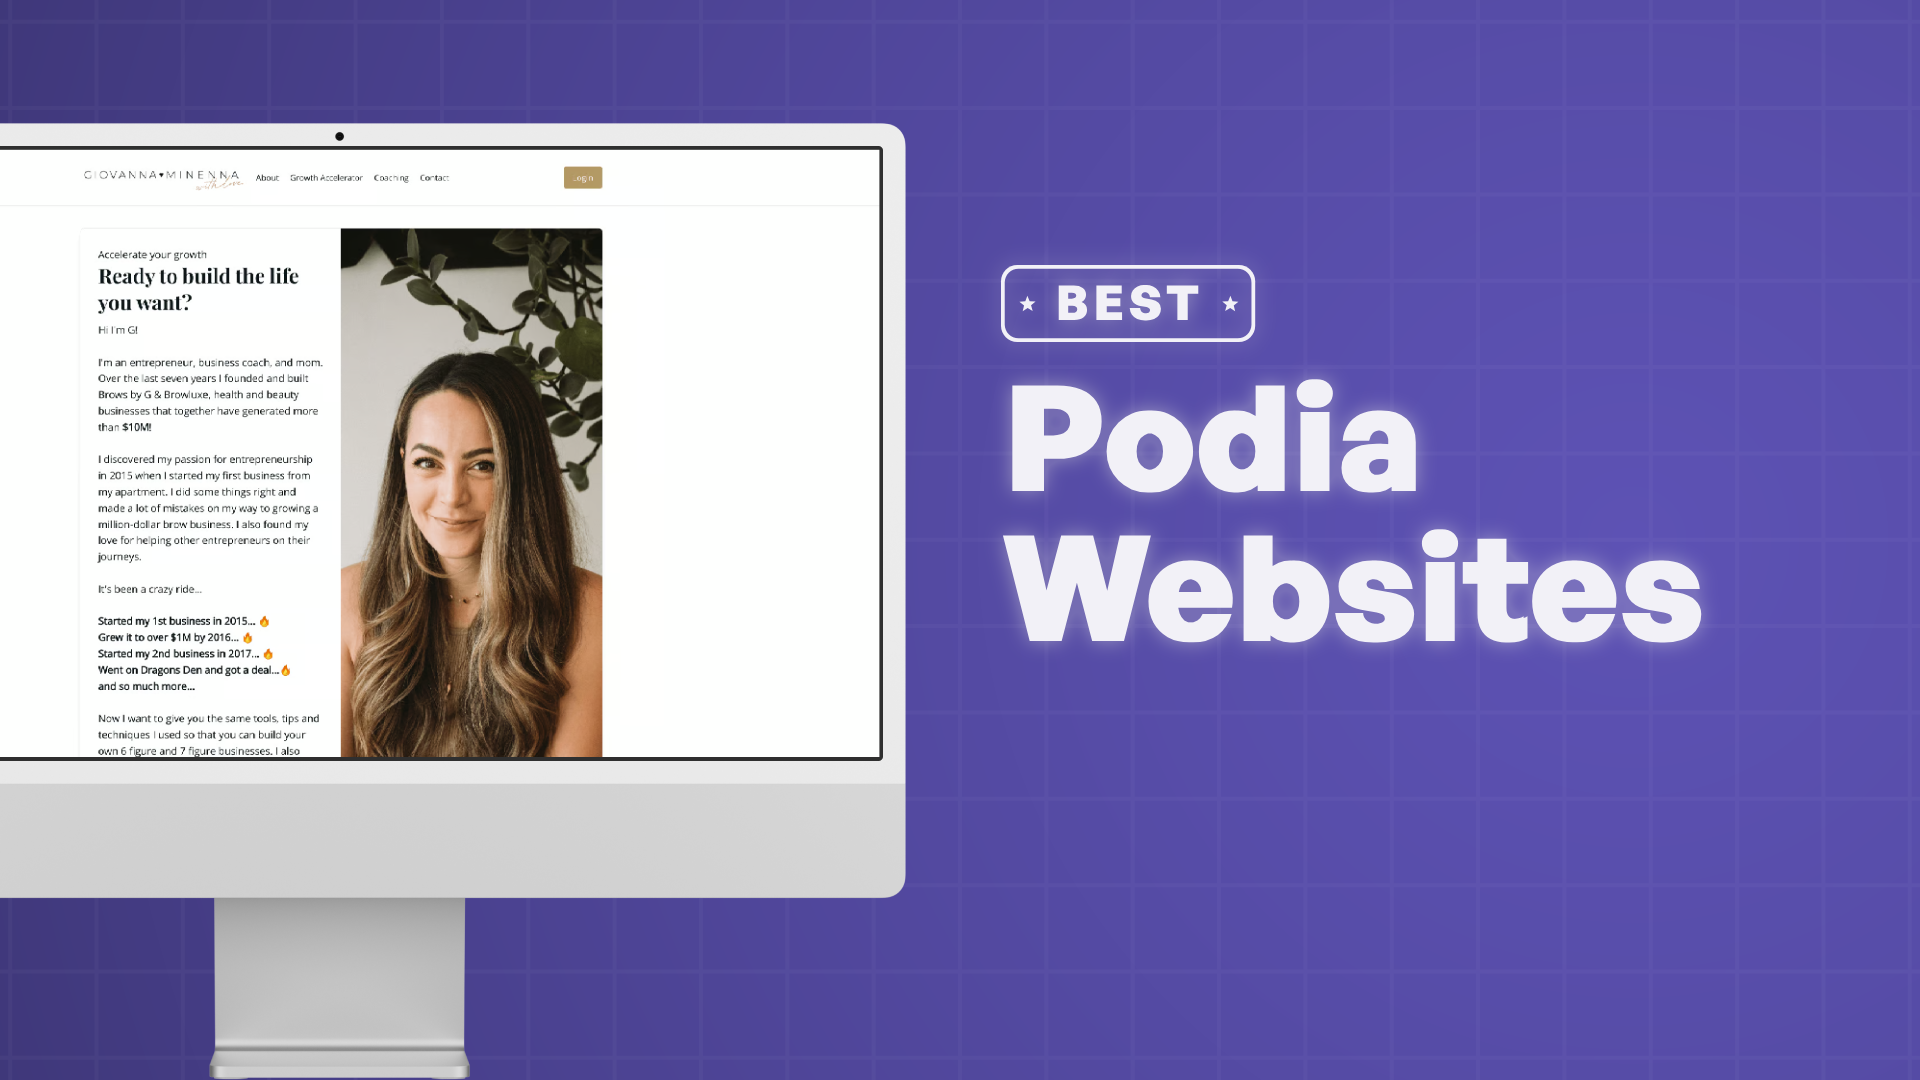 "Best Podia Websites" with screenshots of websites on Podia